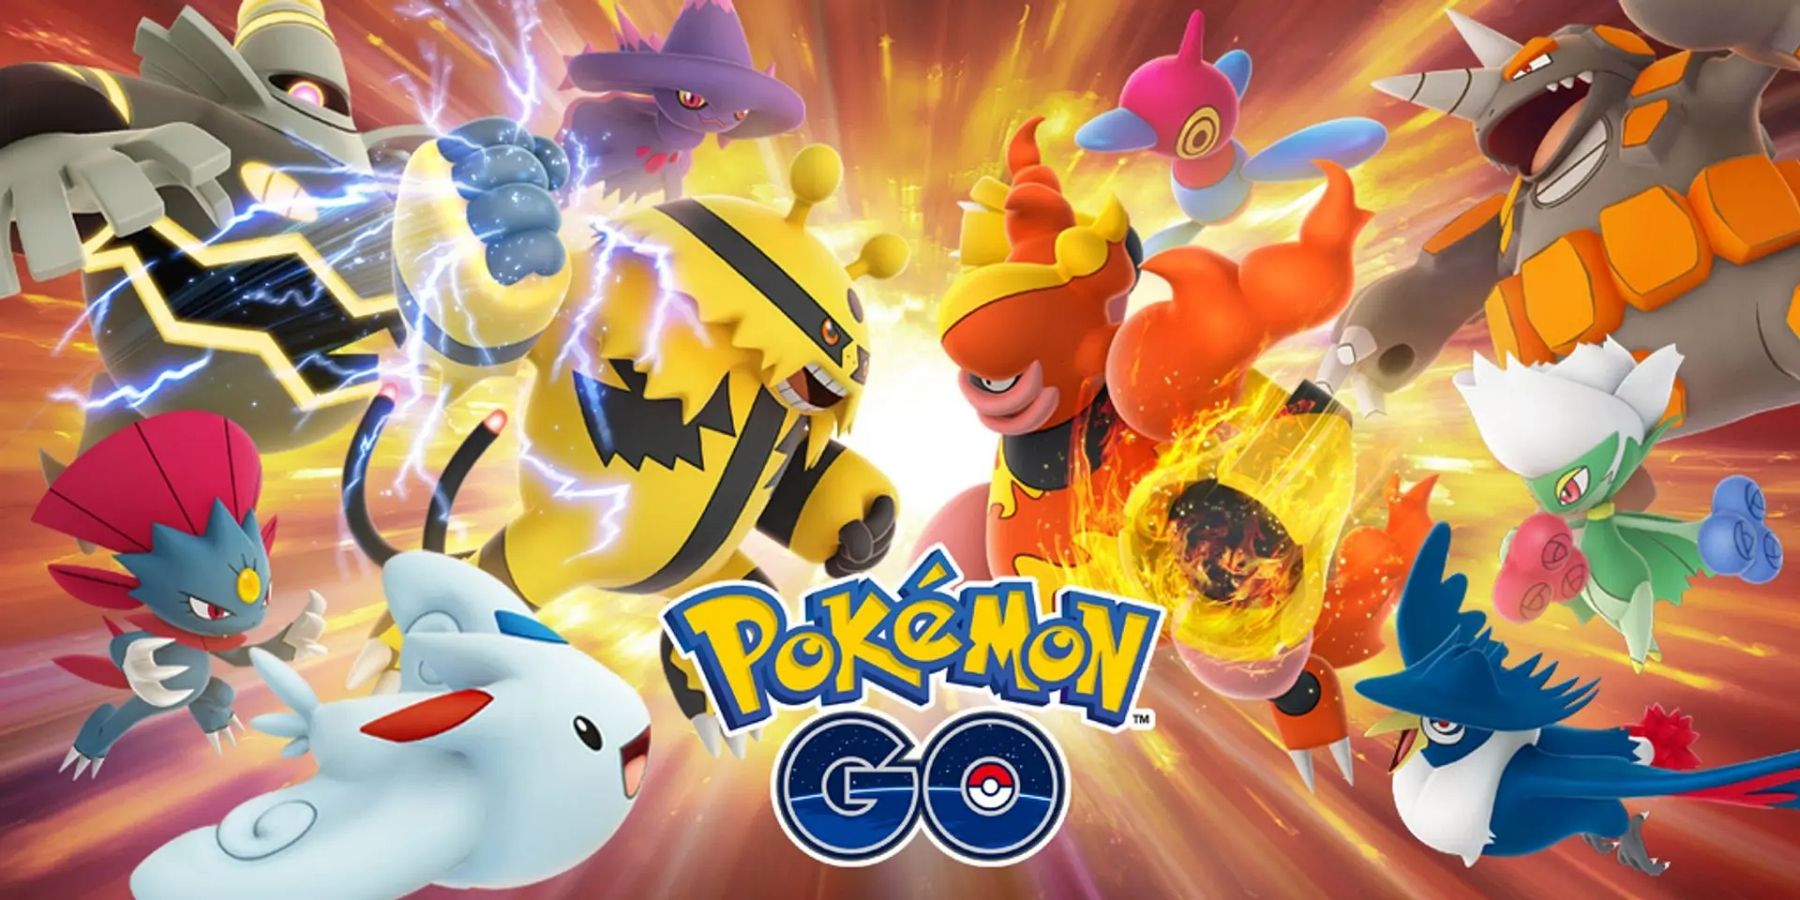 pokemon-go-legenadry-debut-regieleki-but-theres-a-catch-easter